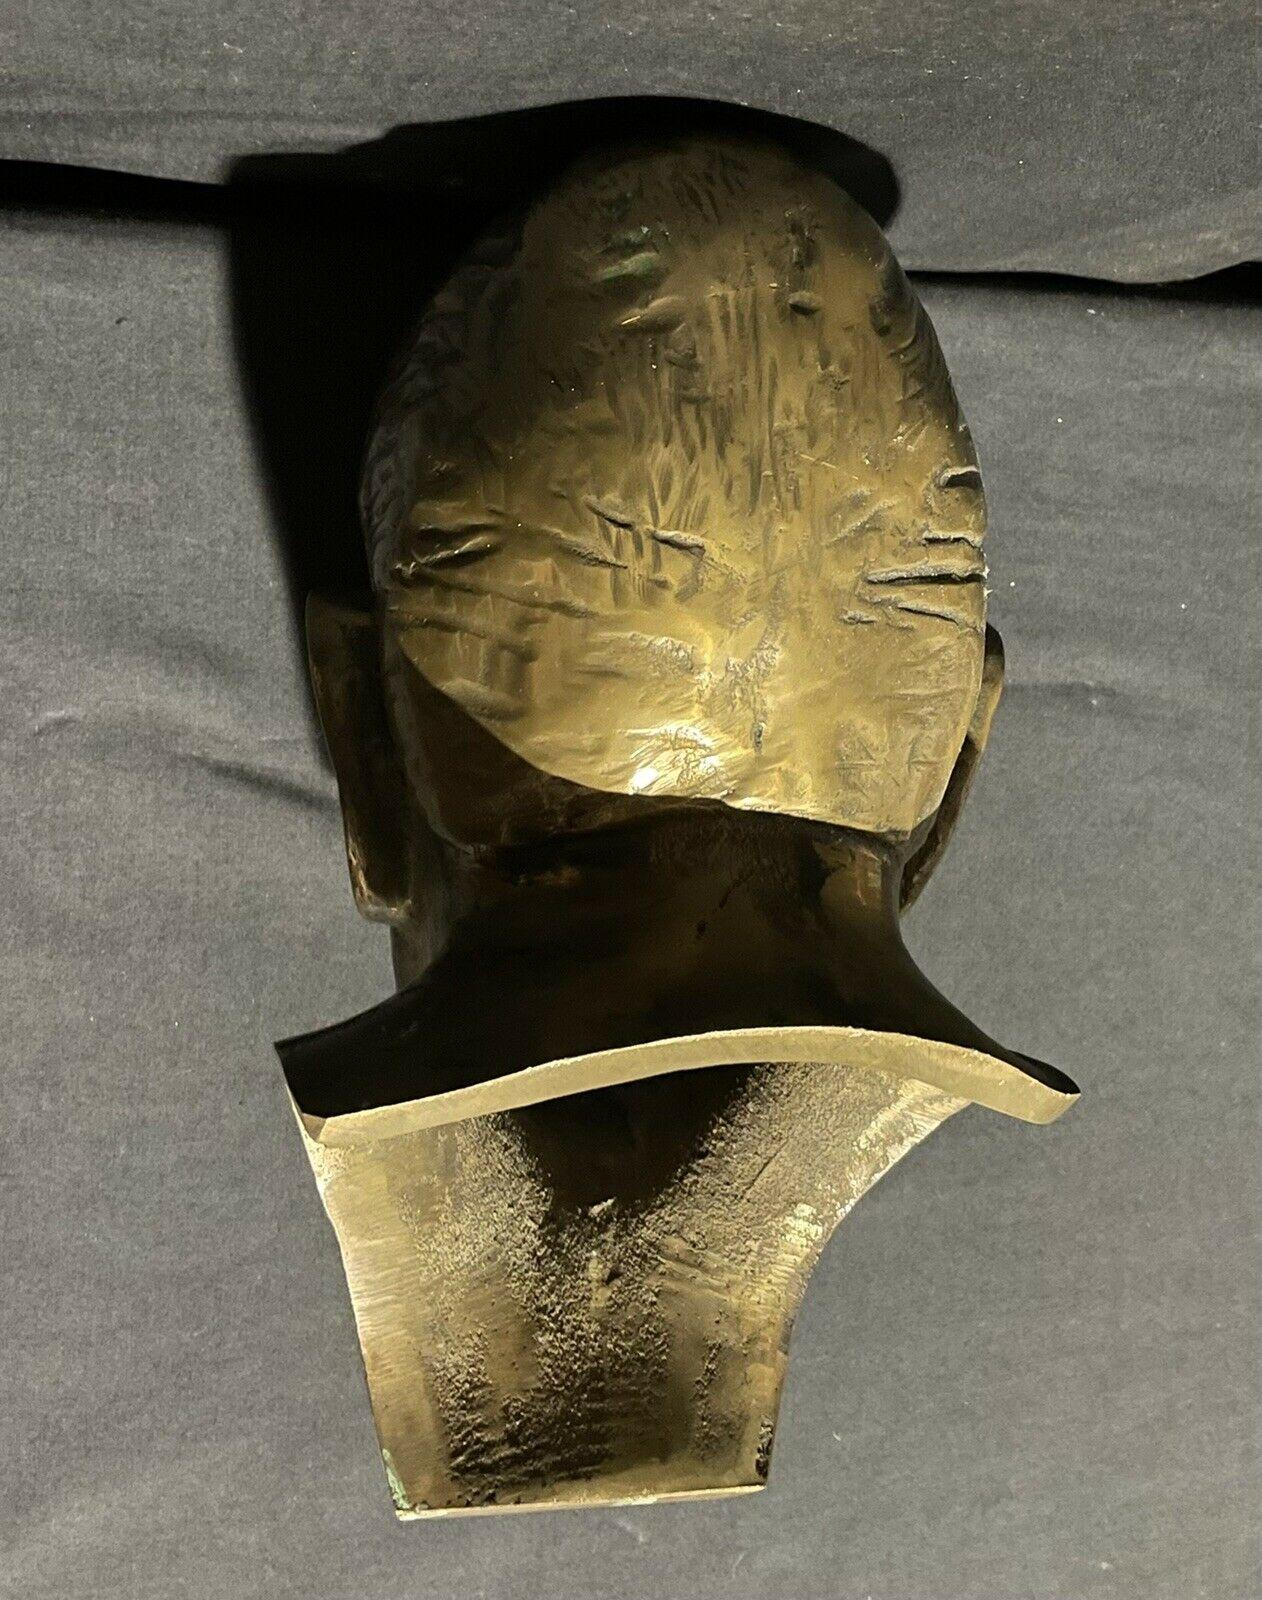 ORIGINAL PERIOD BRONZE HEAD SCULPTURE PRESIDENT RICHARD NIXON  - Gold Figurative Sculpture by Unknown